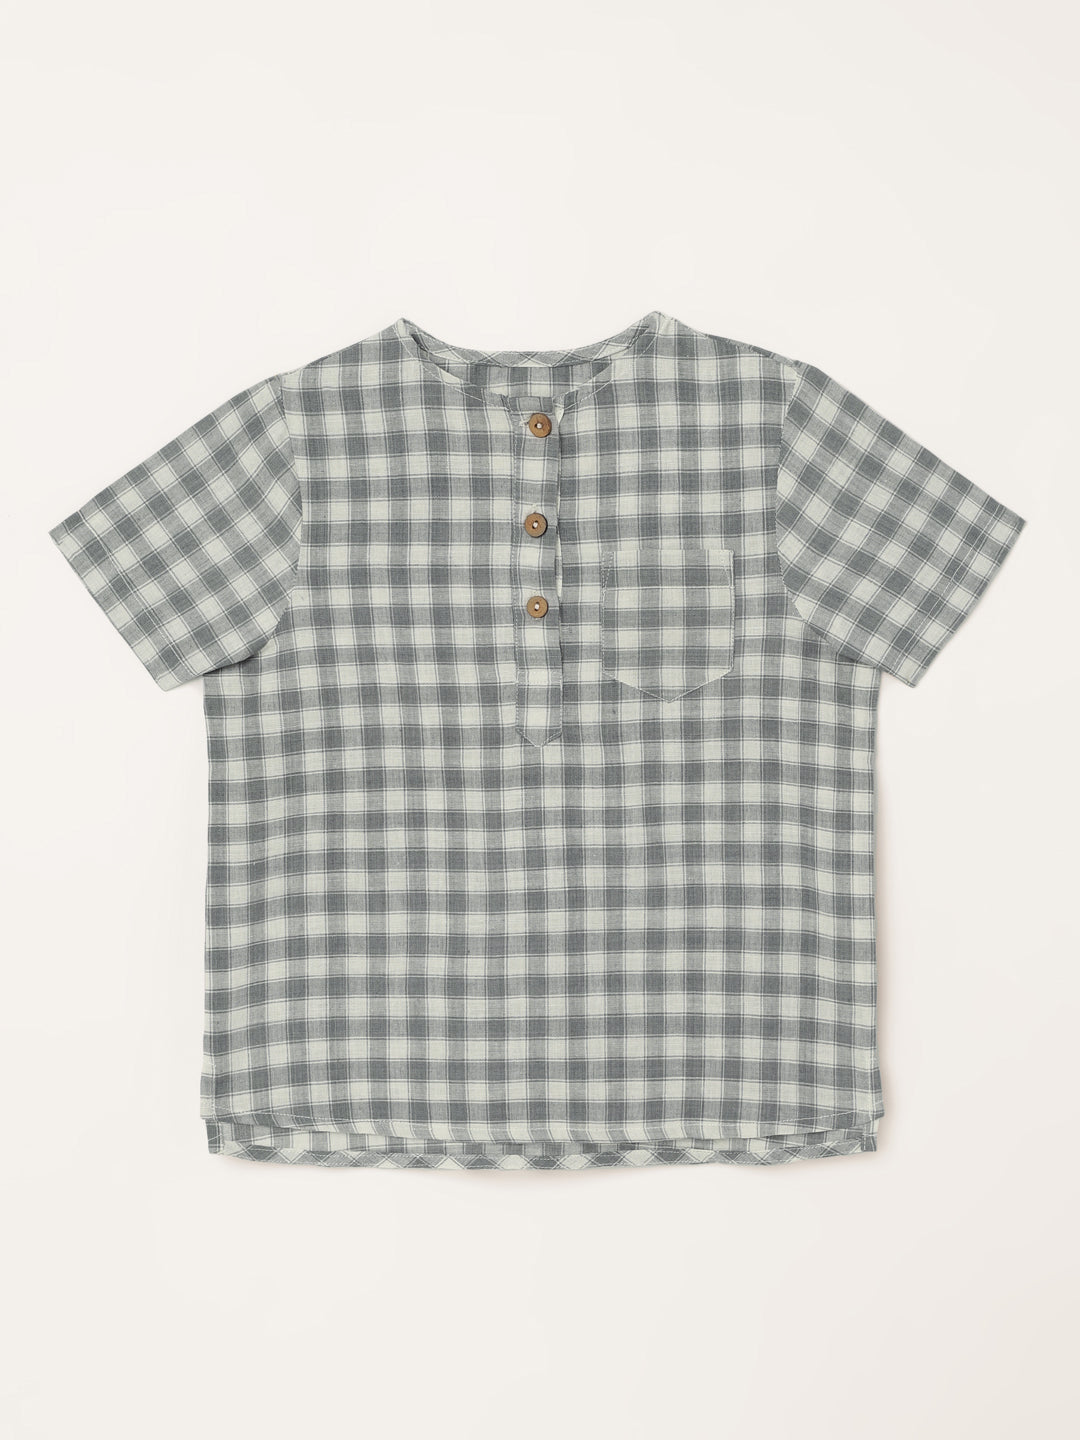 Boys Handloom Cotton Grey Checks Half Sleeves Shirt 1 yr to 8 yrs - Front